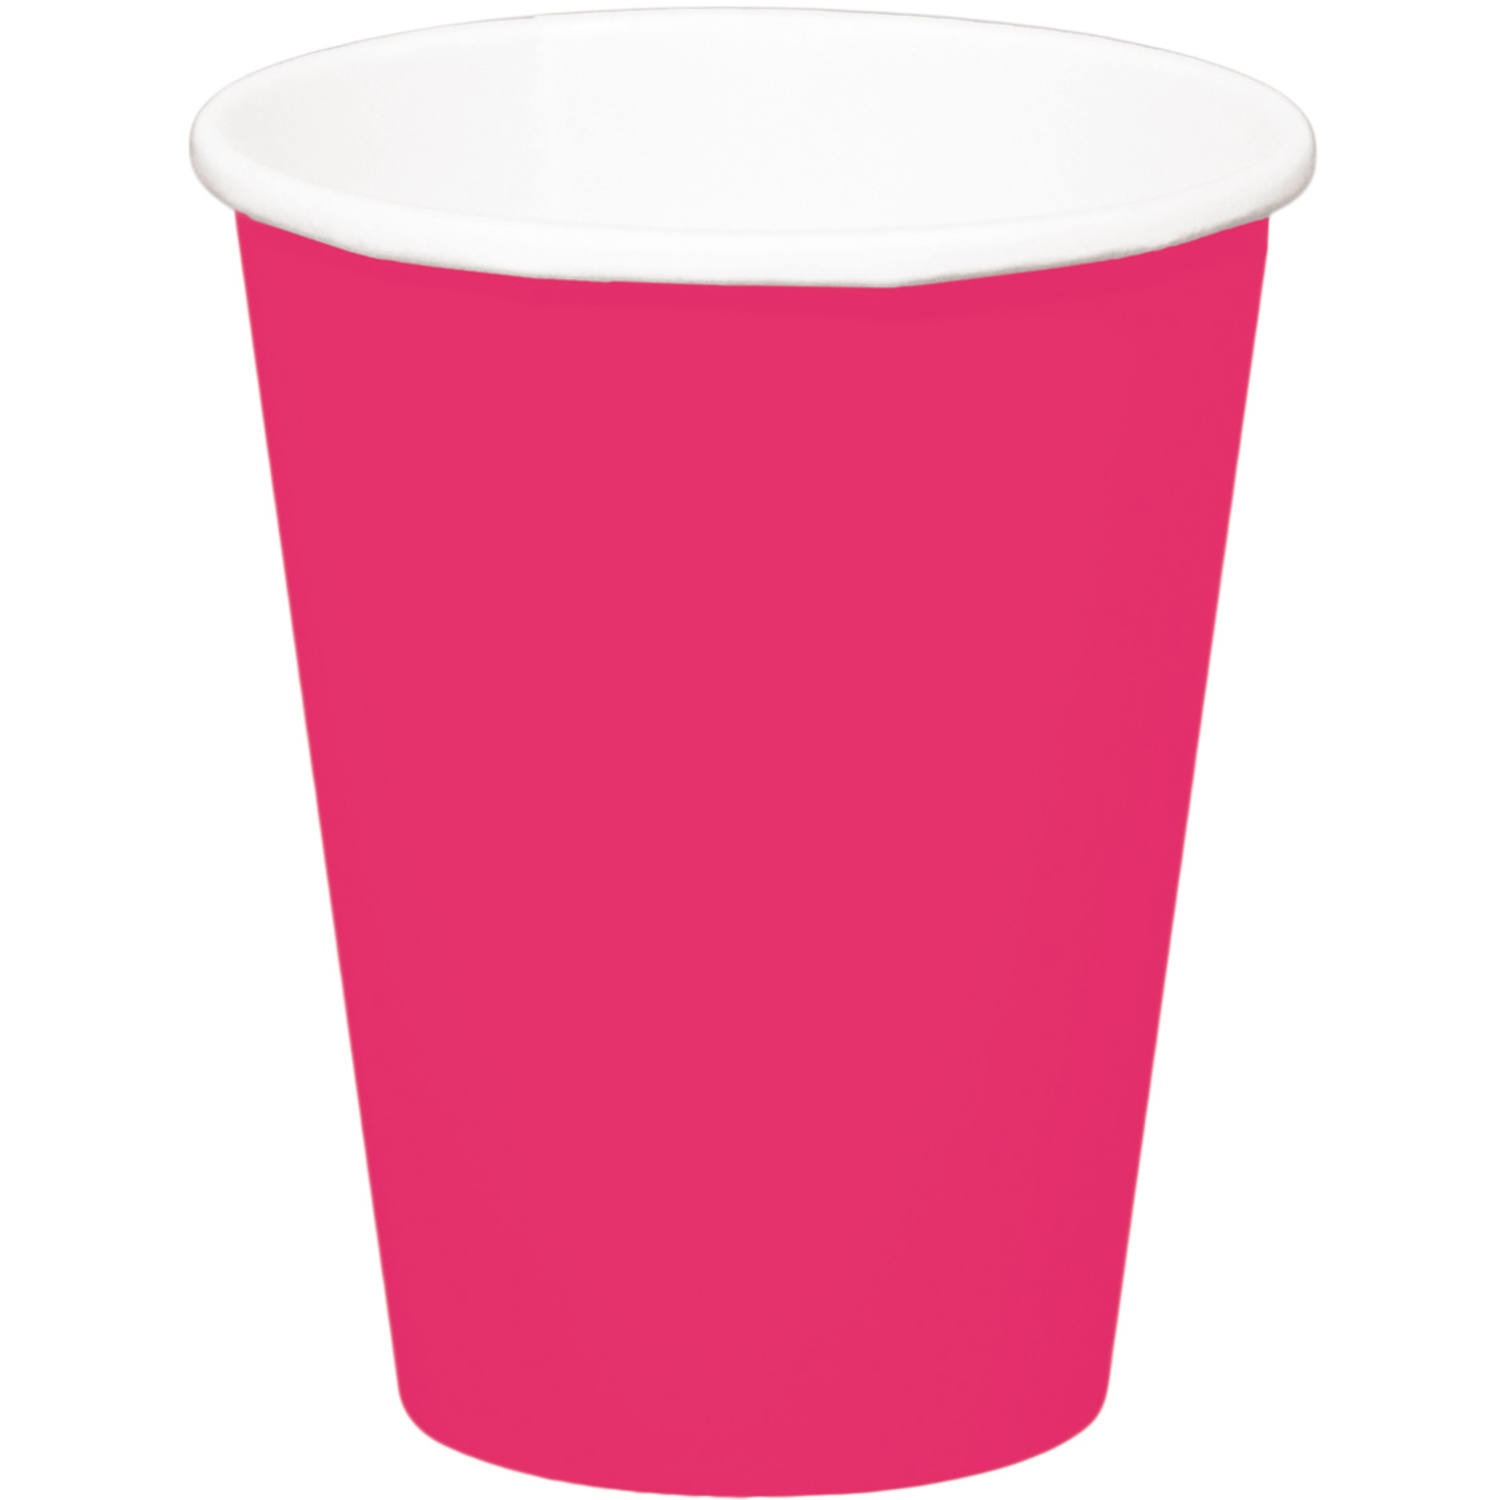 8x stuks drinkbekers van papier fuchsia roze 350 ml